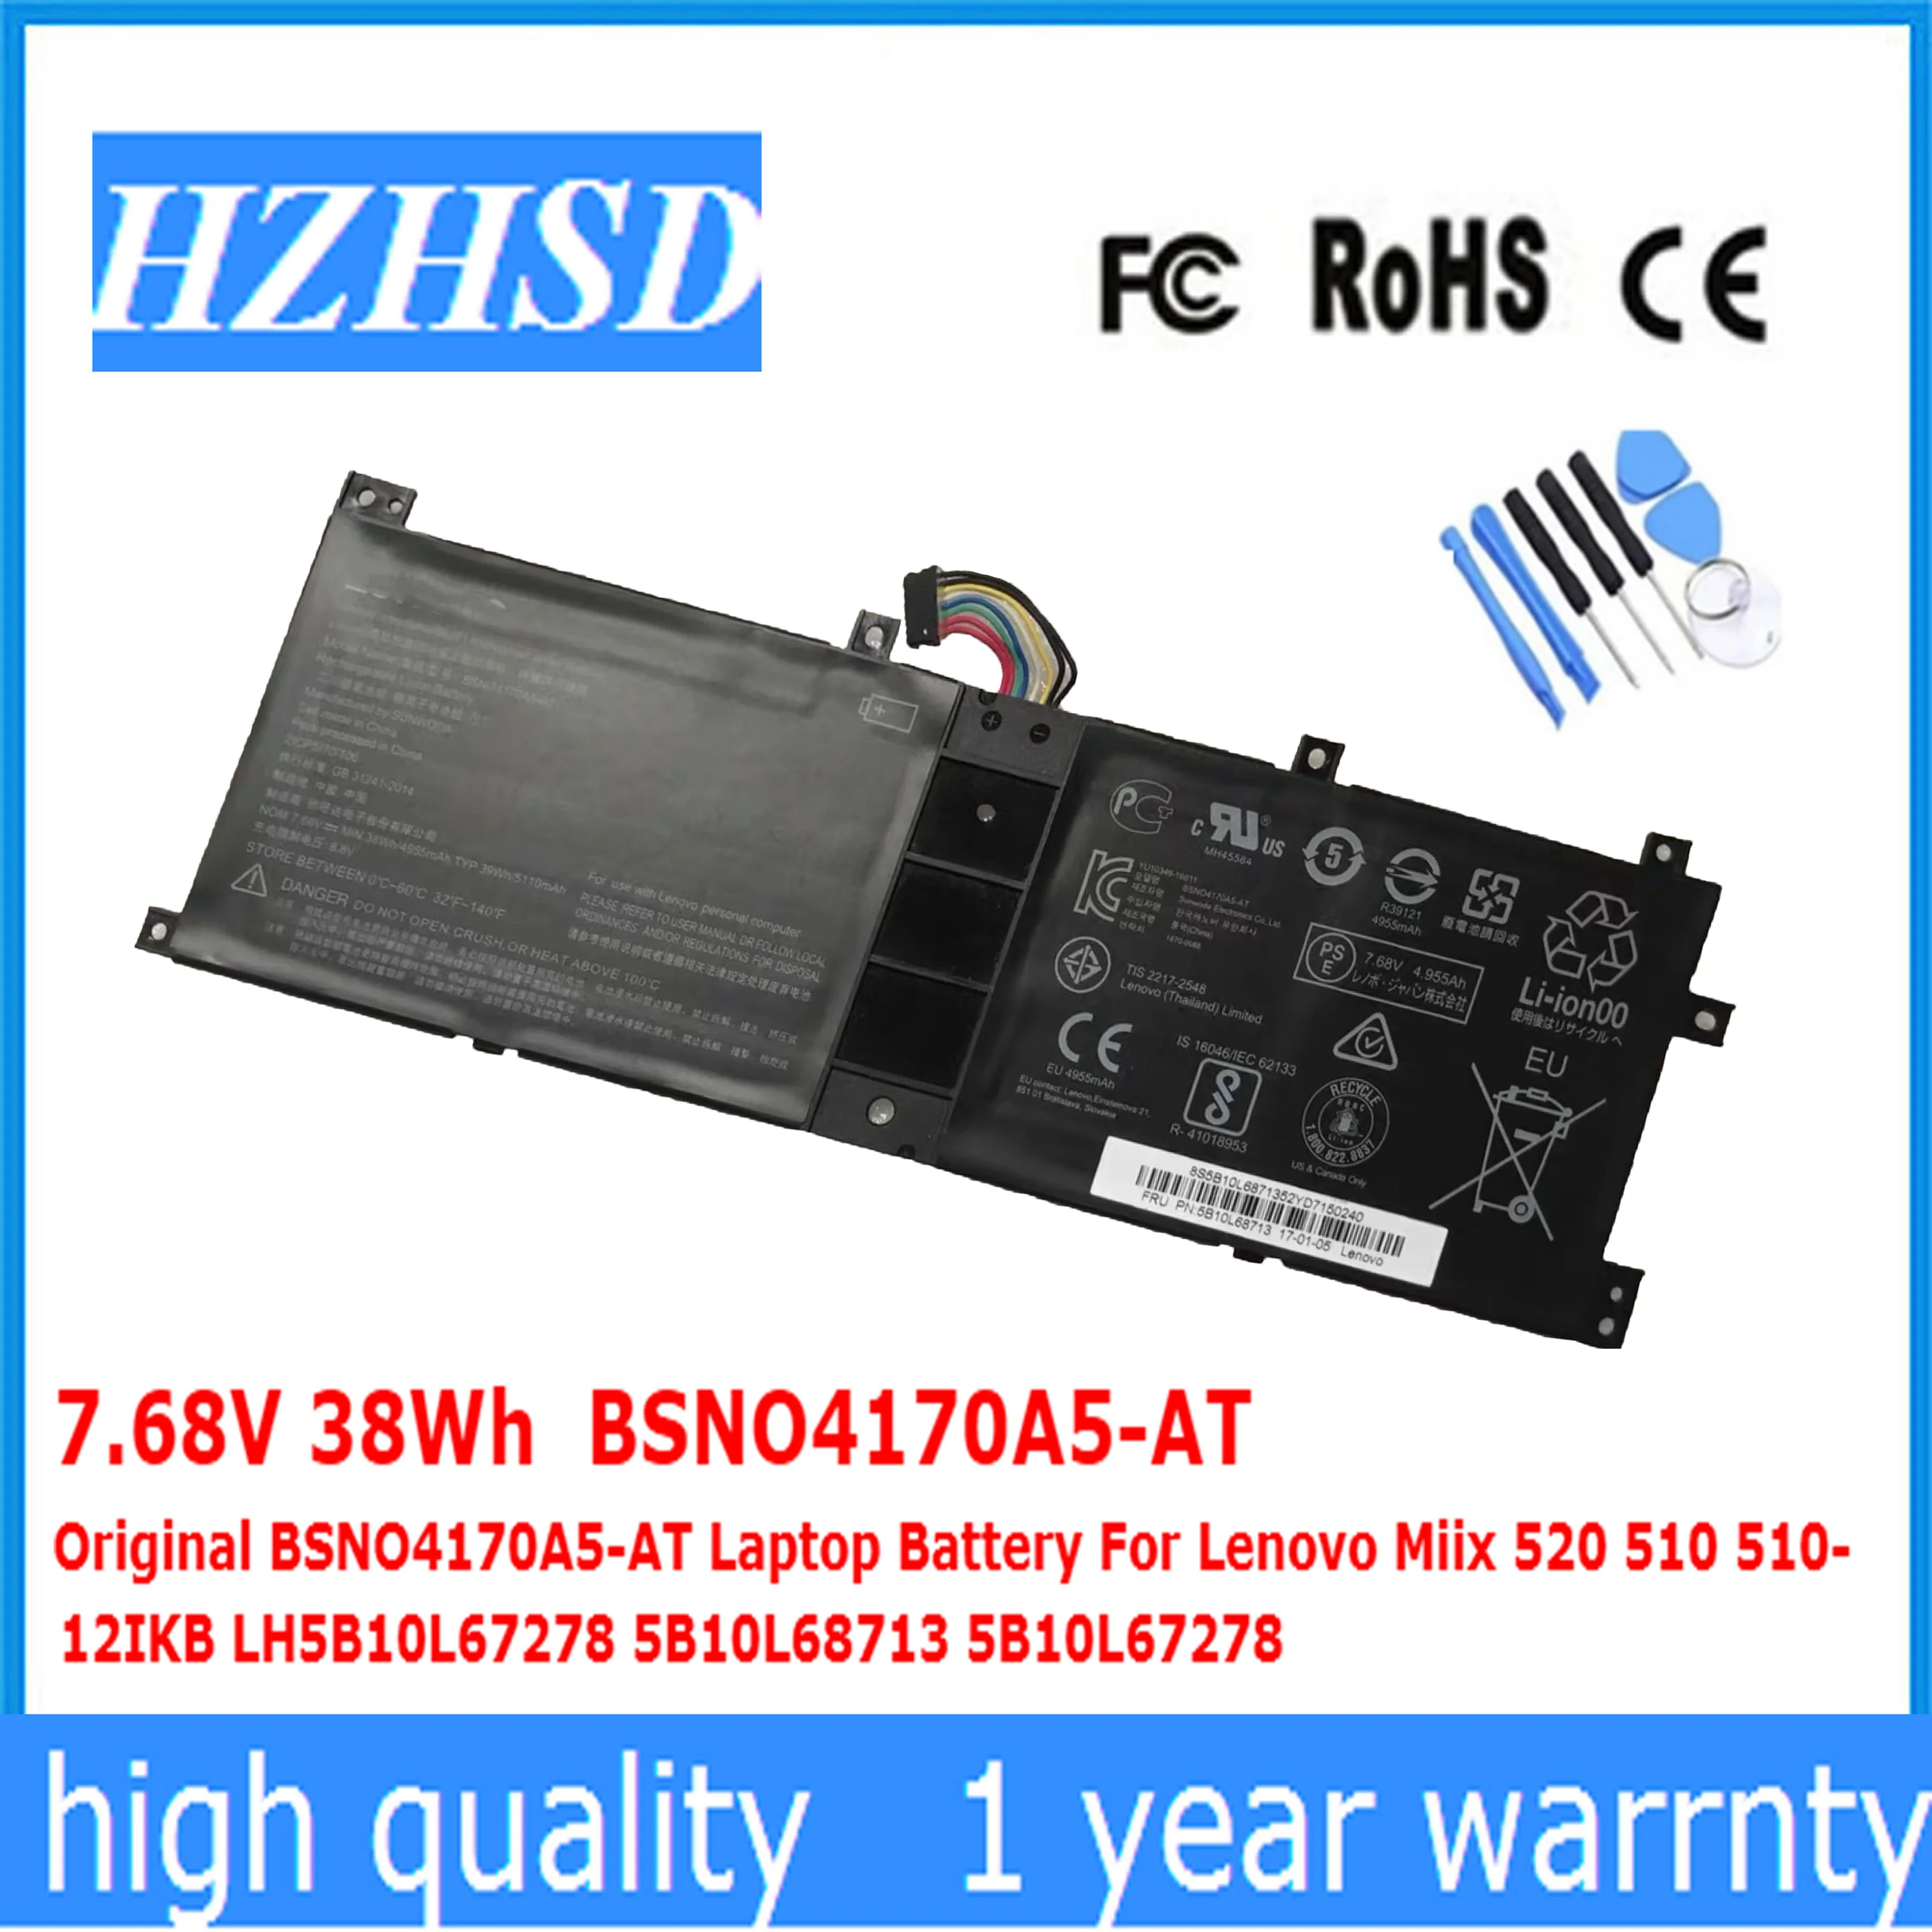 

7.68V 38Wh Original BSNO4170A5-AT BSN04170A5 Laptop Battery For Lenovo Miix 520 510 510-12IKB LH5B10L67278 5B10L68713 5B10L67278